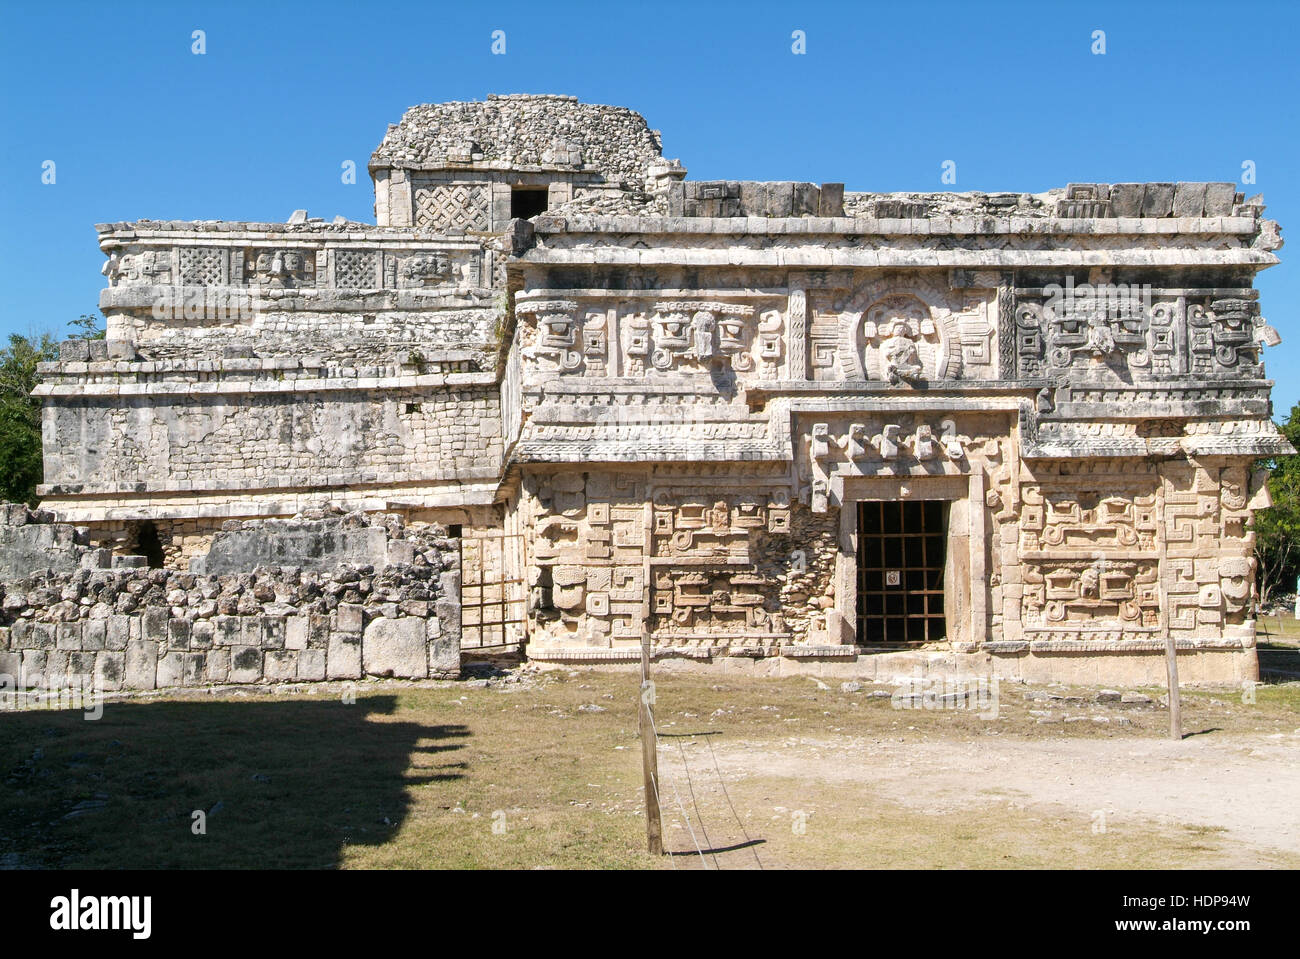 Building called Nunnery (Edificio de las Monjas) in the ancient Mayan city Chichen Itza, Mexico Stock Photo